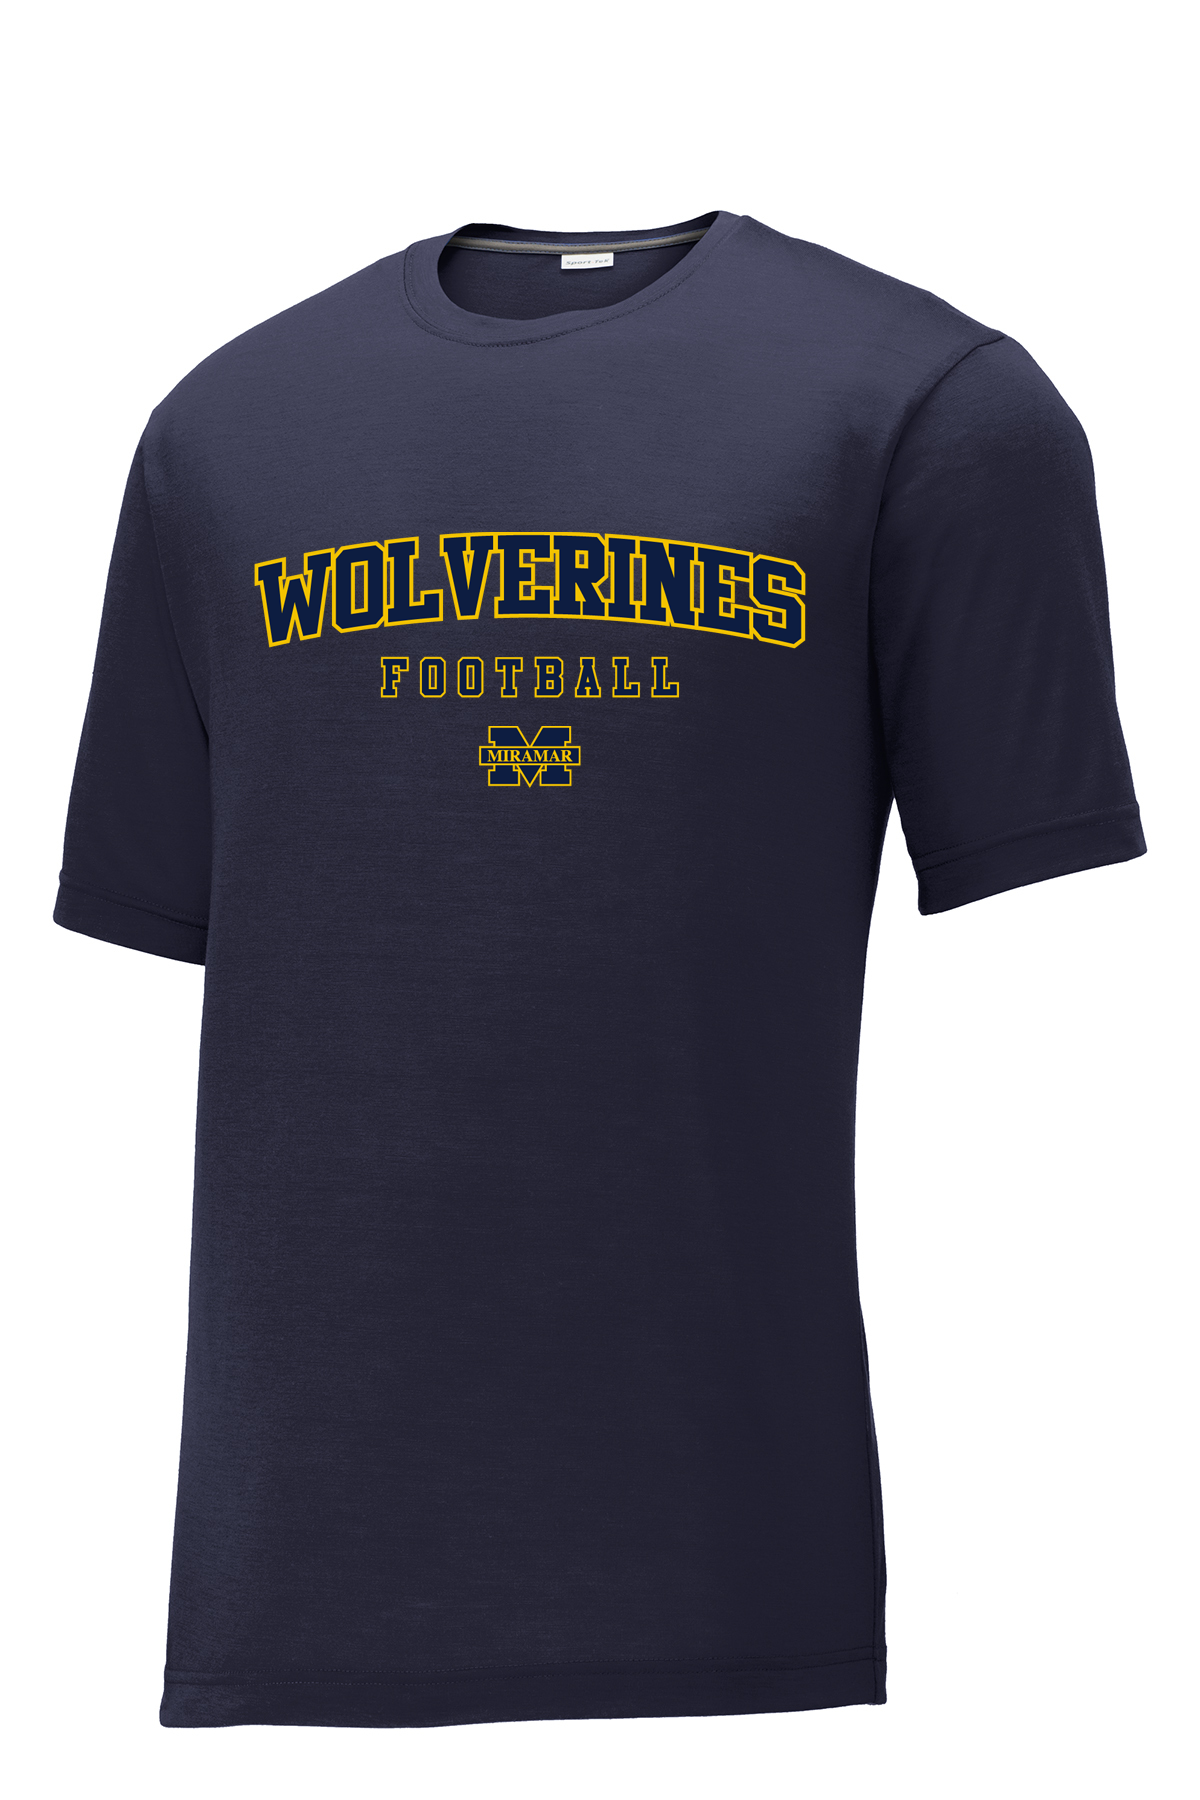 Miramar Wolverines Football CottonTouch Performance T-Shirt